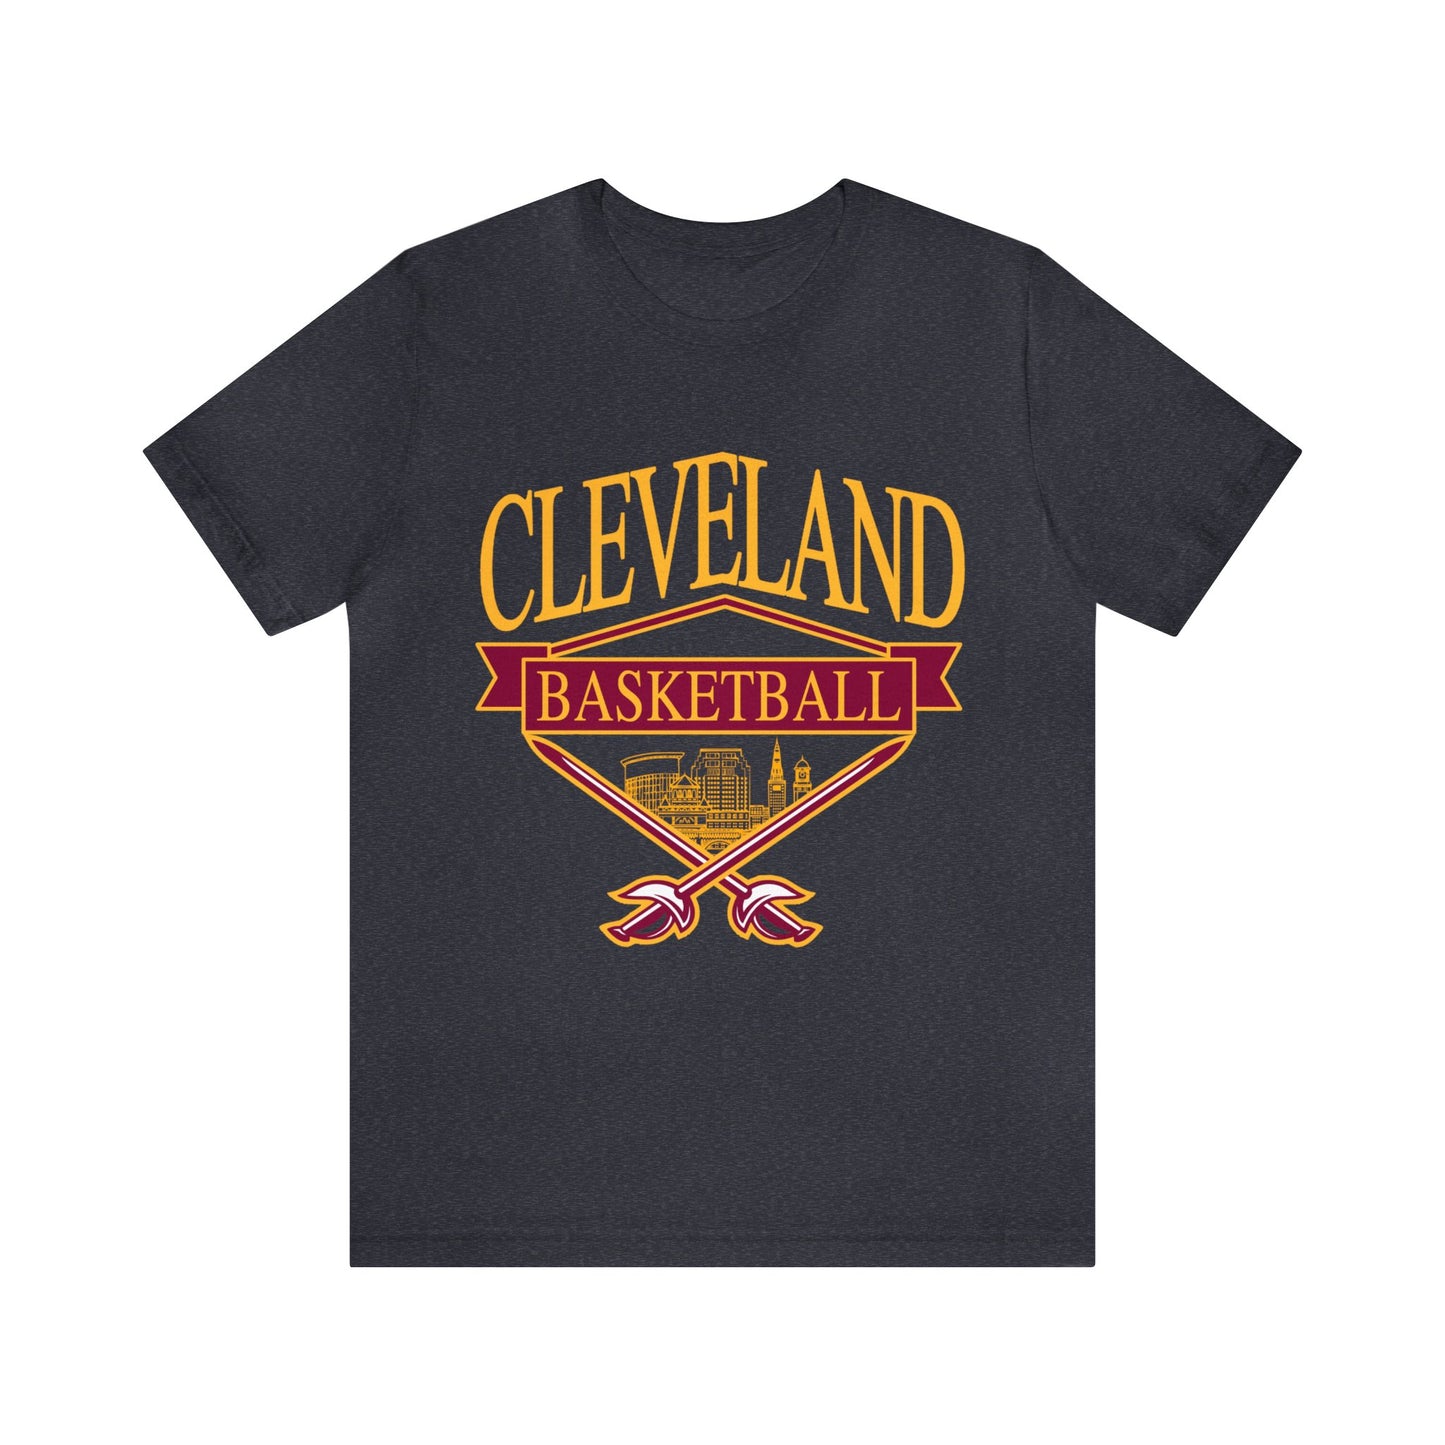 Vintage Cleveland Cavaliers Basketball T-Shirt Wine & Gold - NBA Basketball Unisex Short Sleeve Tee